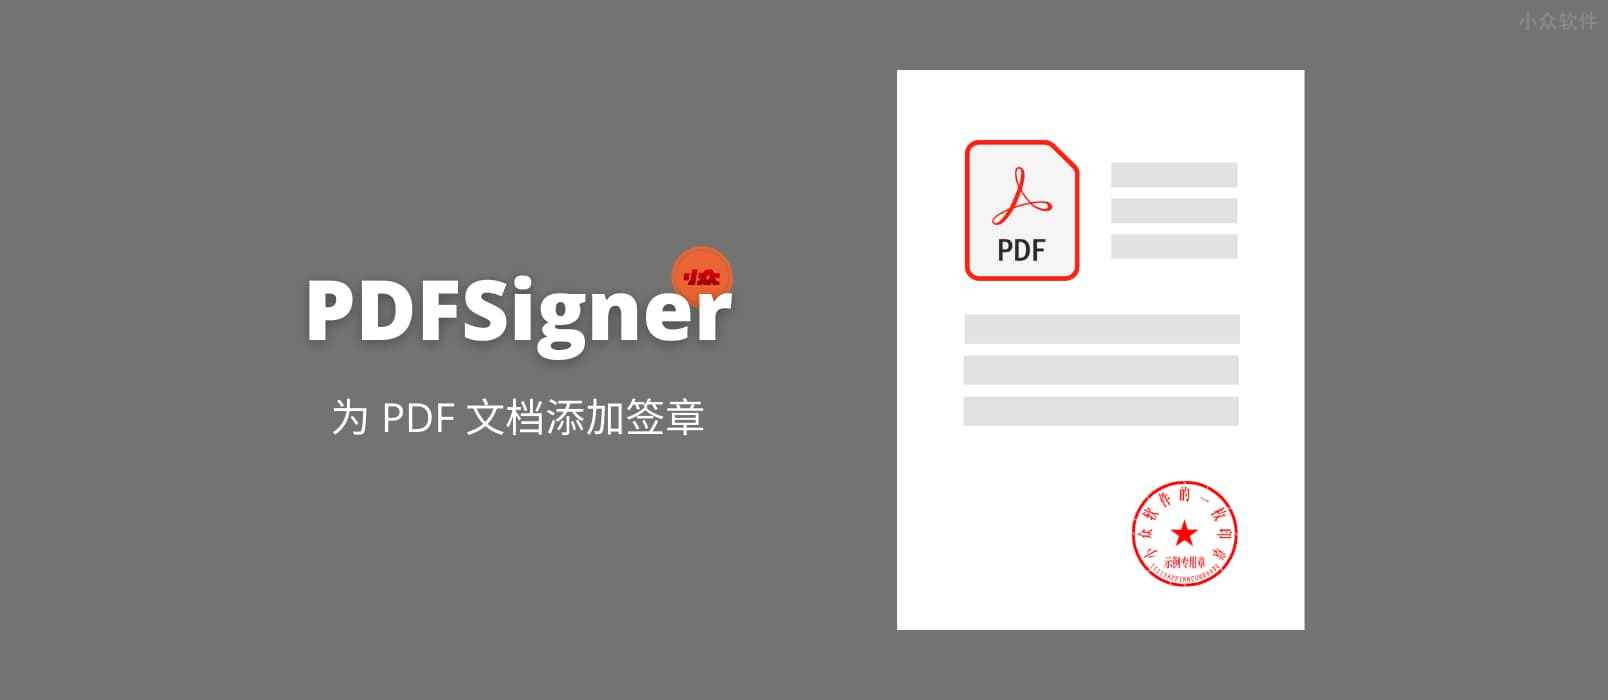 PDFSigner – 在线为 PDF 文档添加签章(图1)